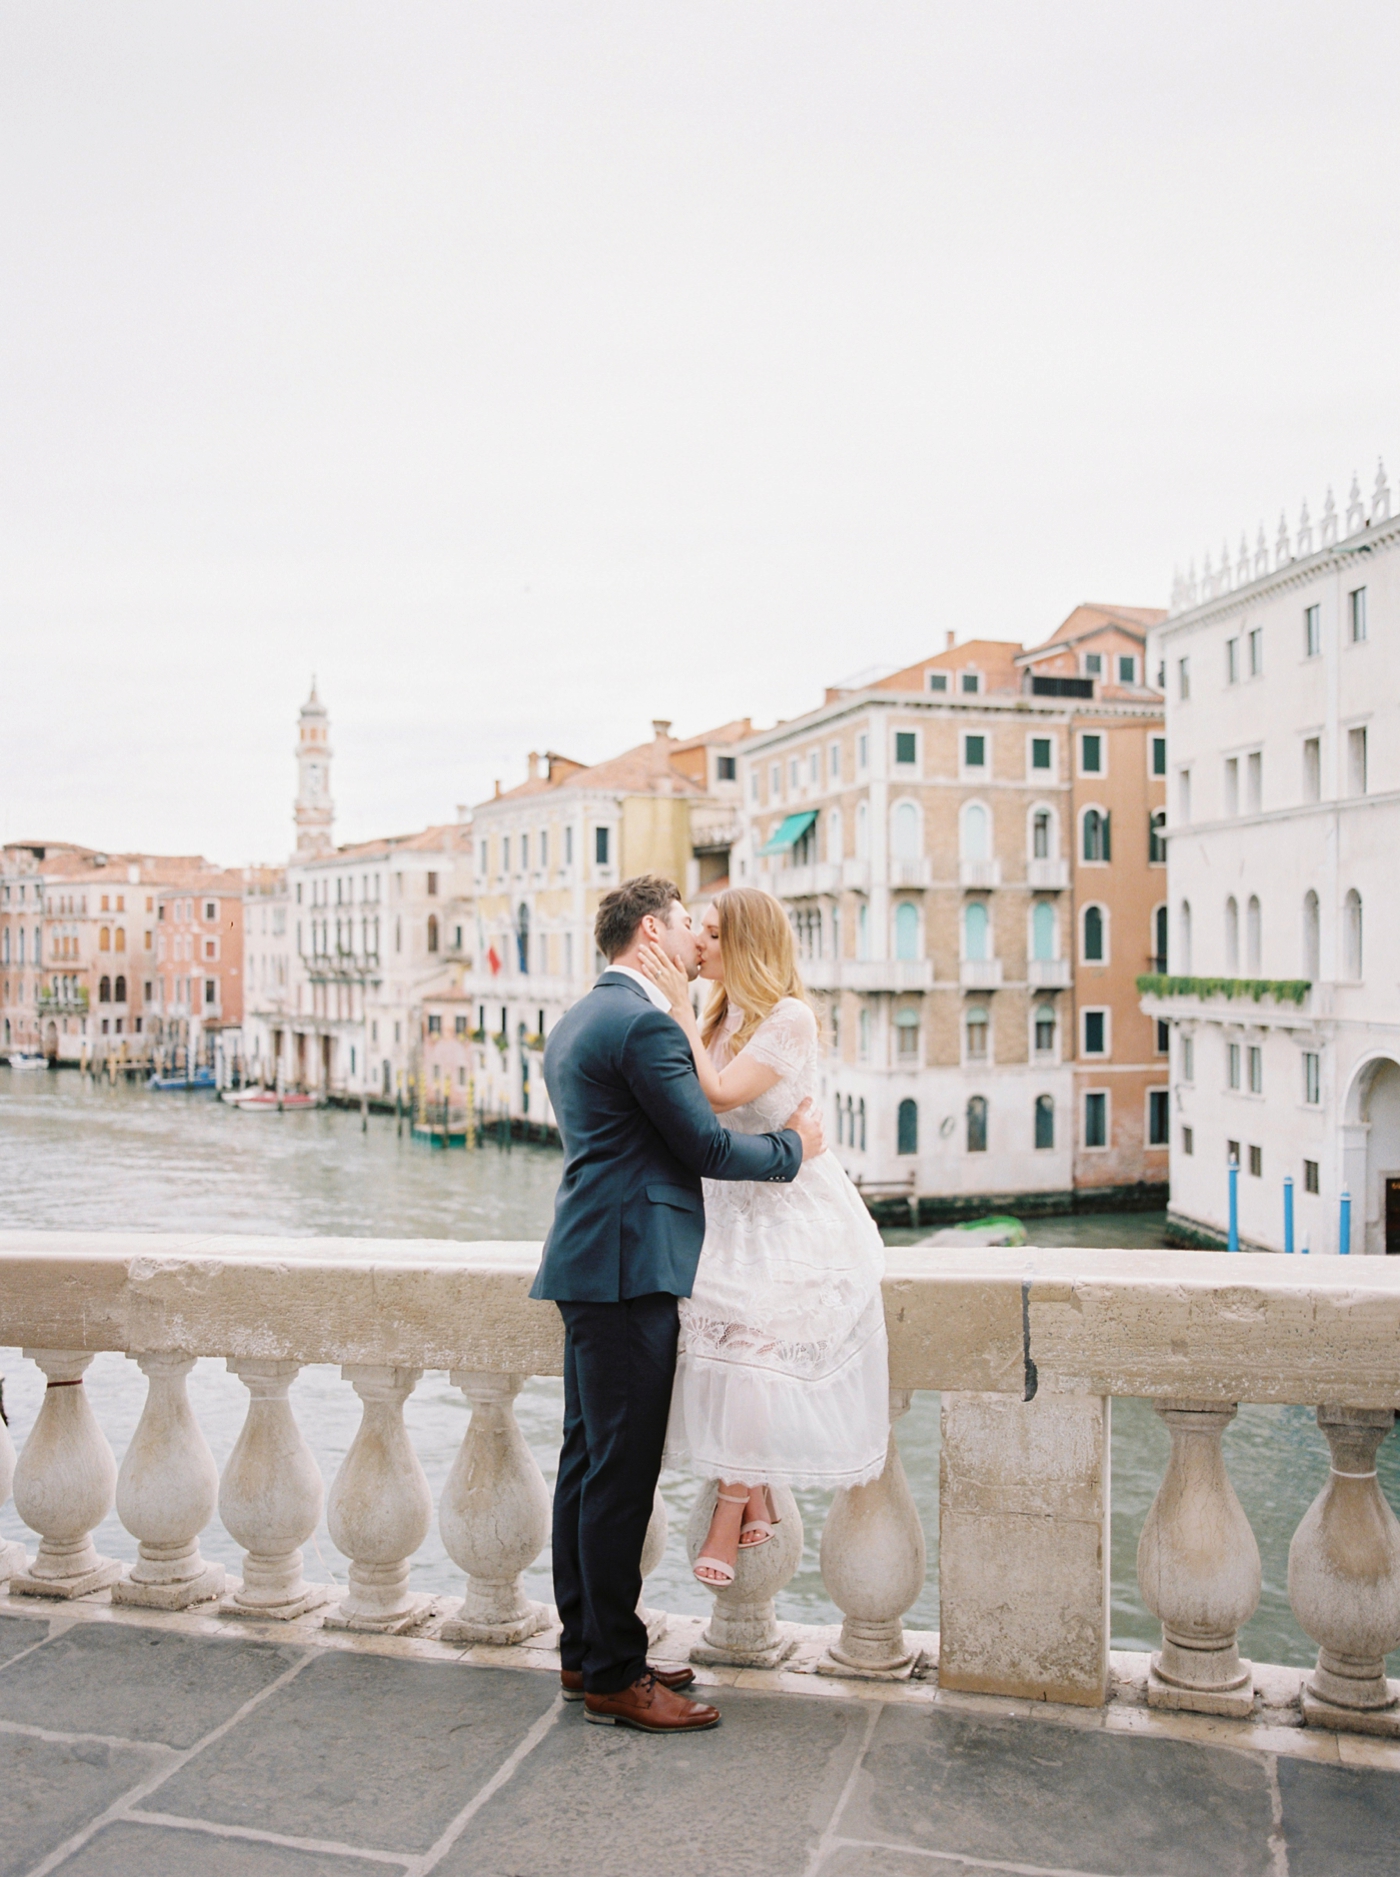 Venice couples anniversary session | pre wedding photos around the venice canals | fine art film photographer Justine Milton